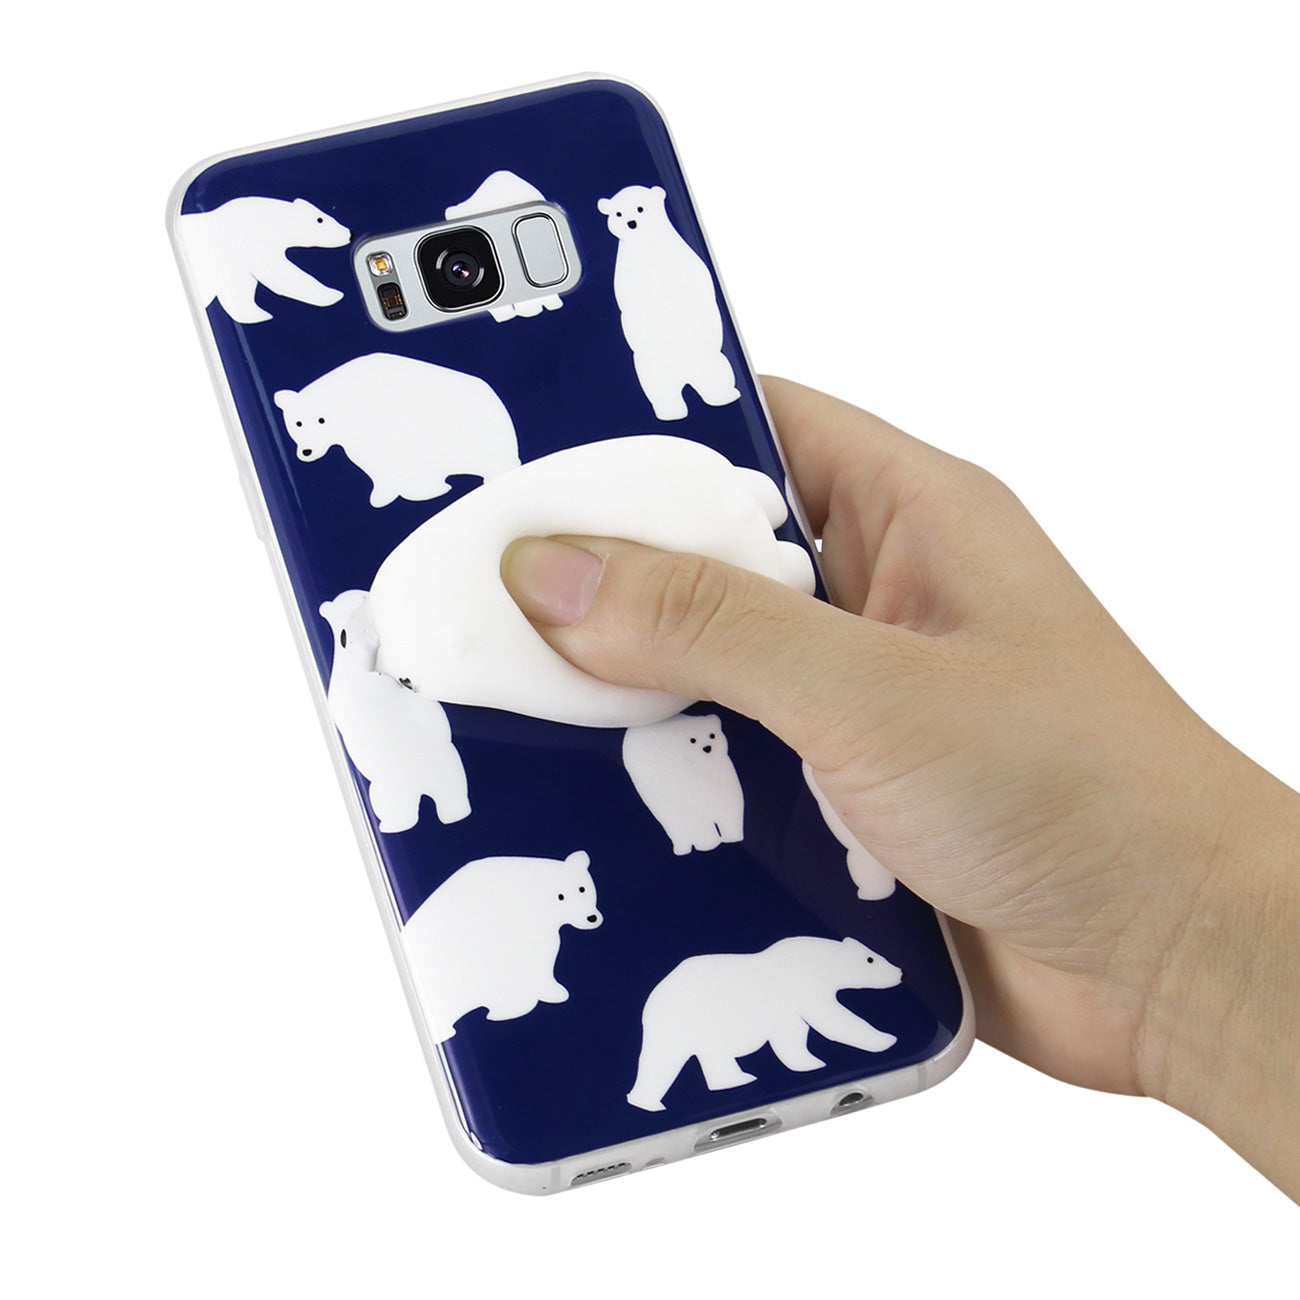 Samsung Galaxy S8 EDGE/S8 Plus TPU Design Case With 3D Soft Silicone Poke Squishy Polar Bear